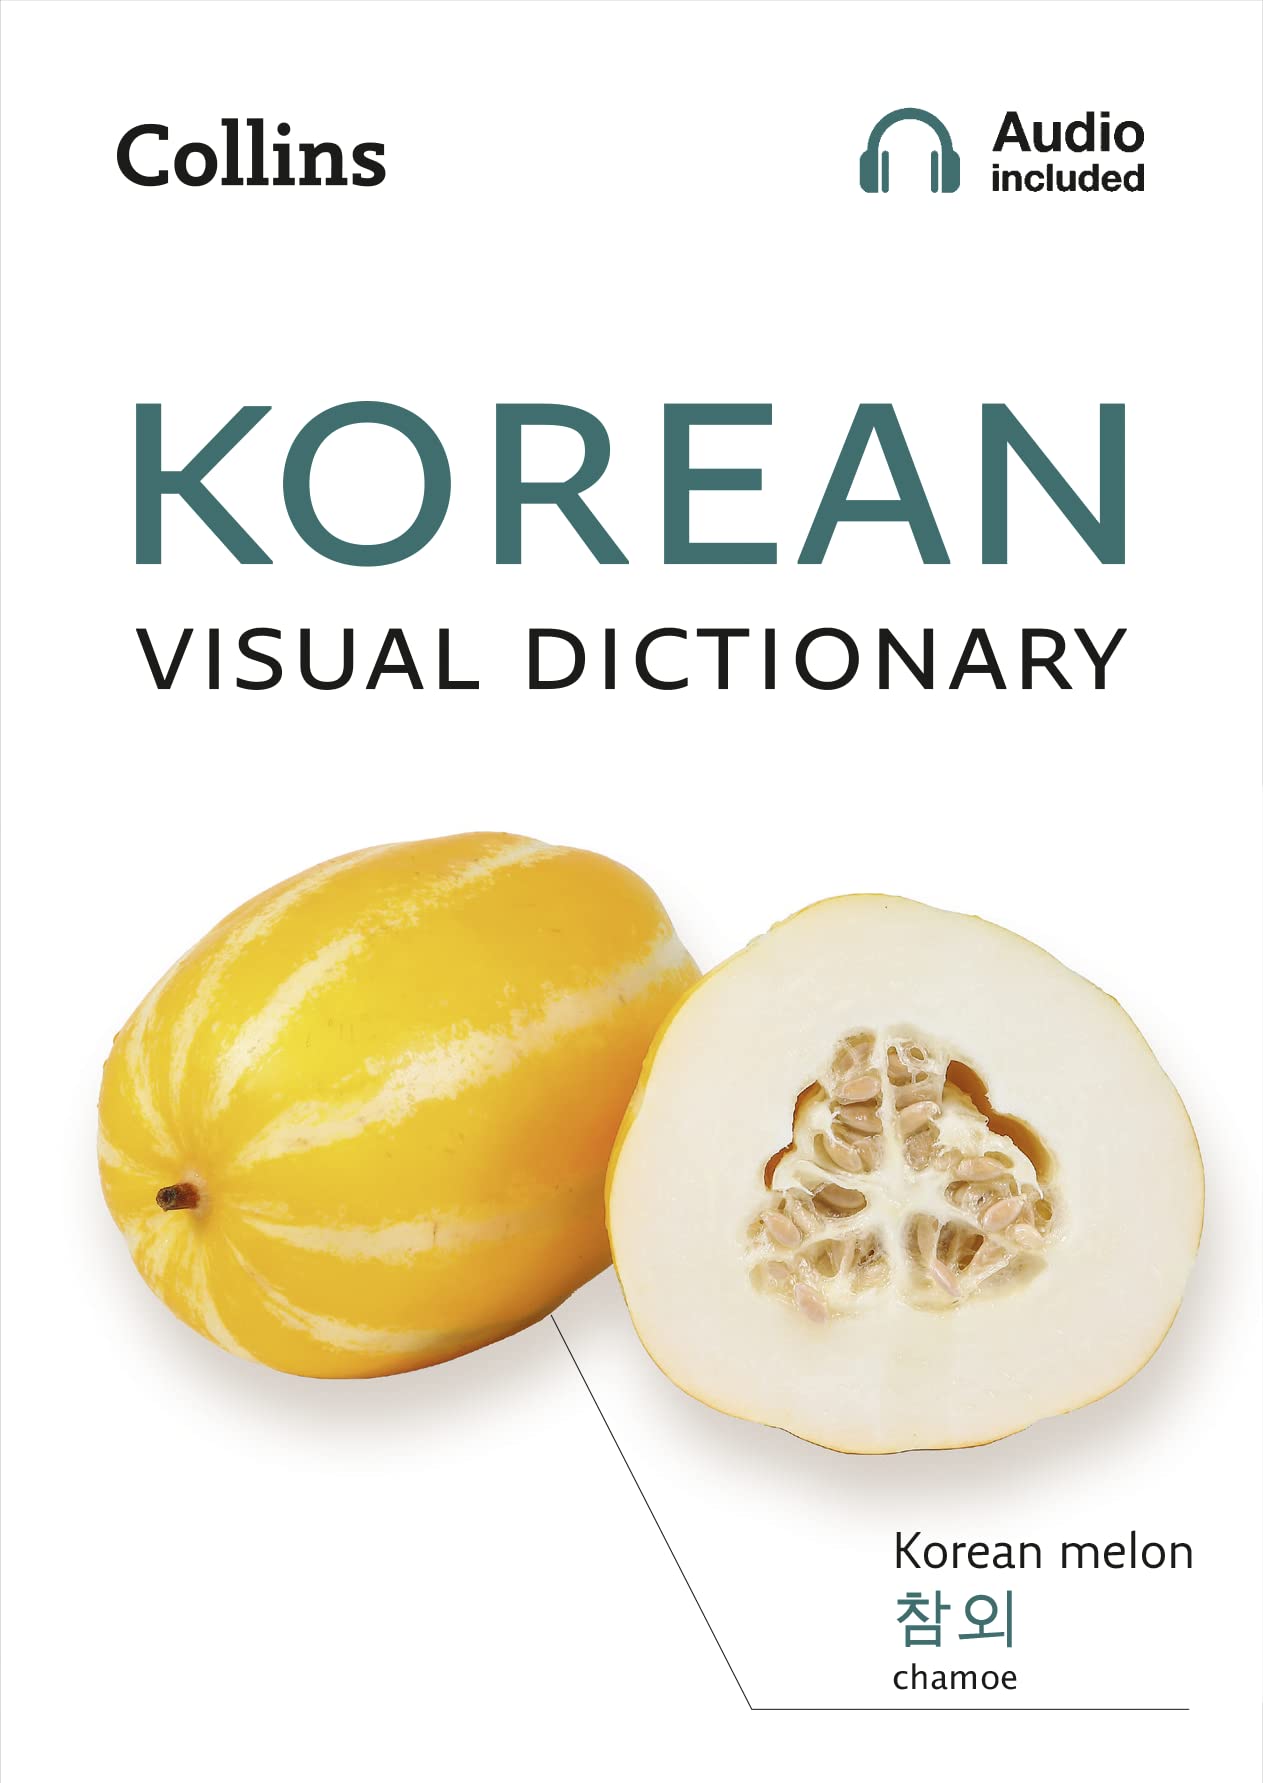 Collins Visual Dictionary: Korean